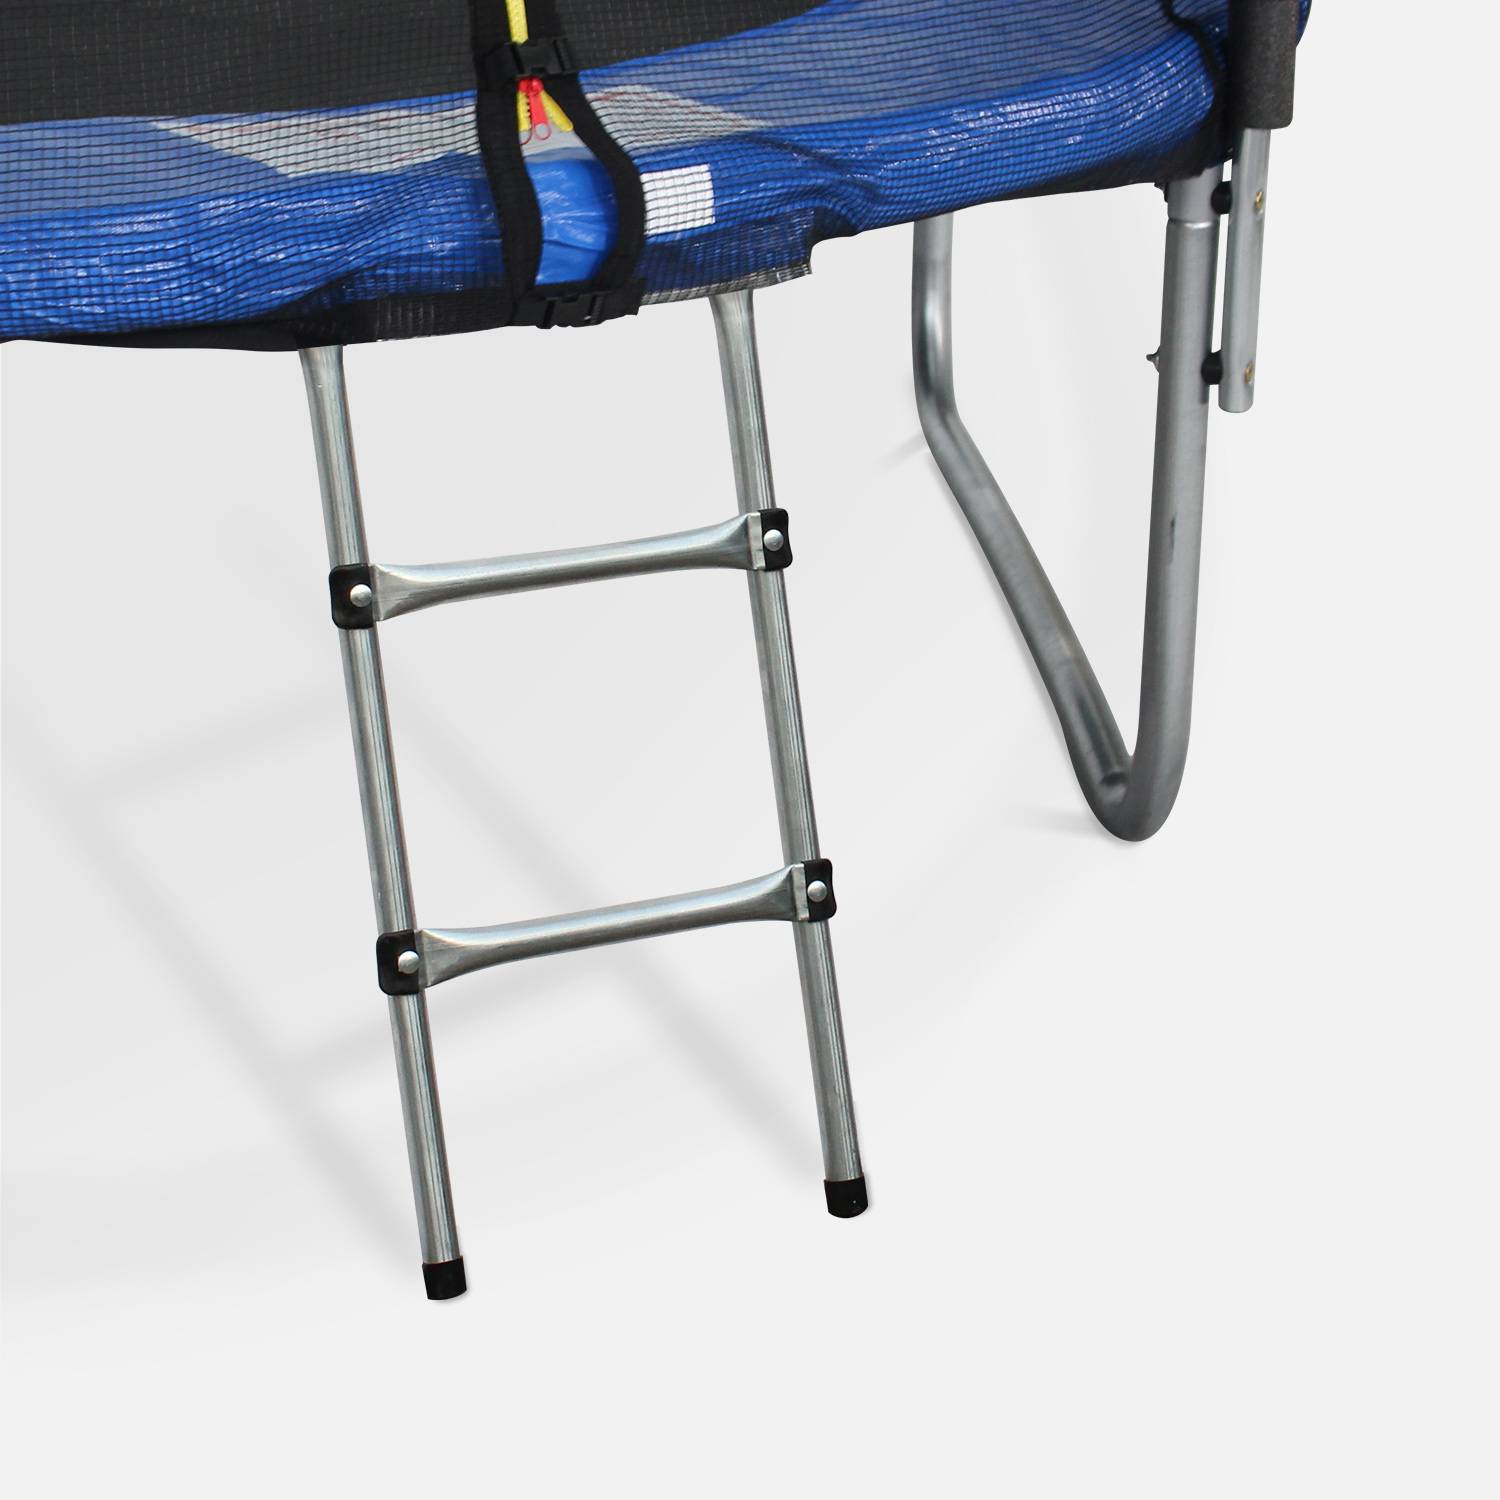 Trampoline Accessories Pack - Ø245 cm - Ladder, Rain Cover, Shoe Net, Anchor Kit Photo2